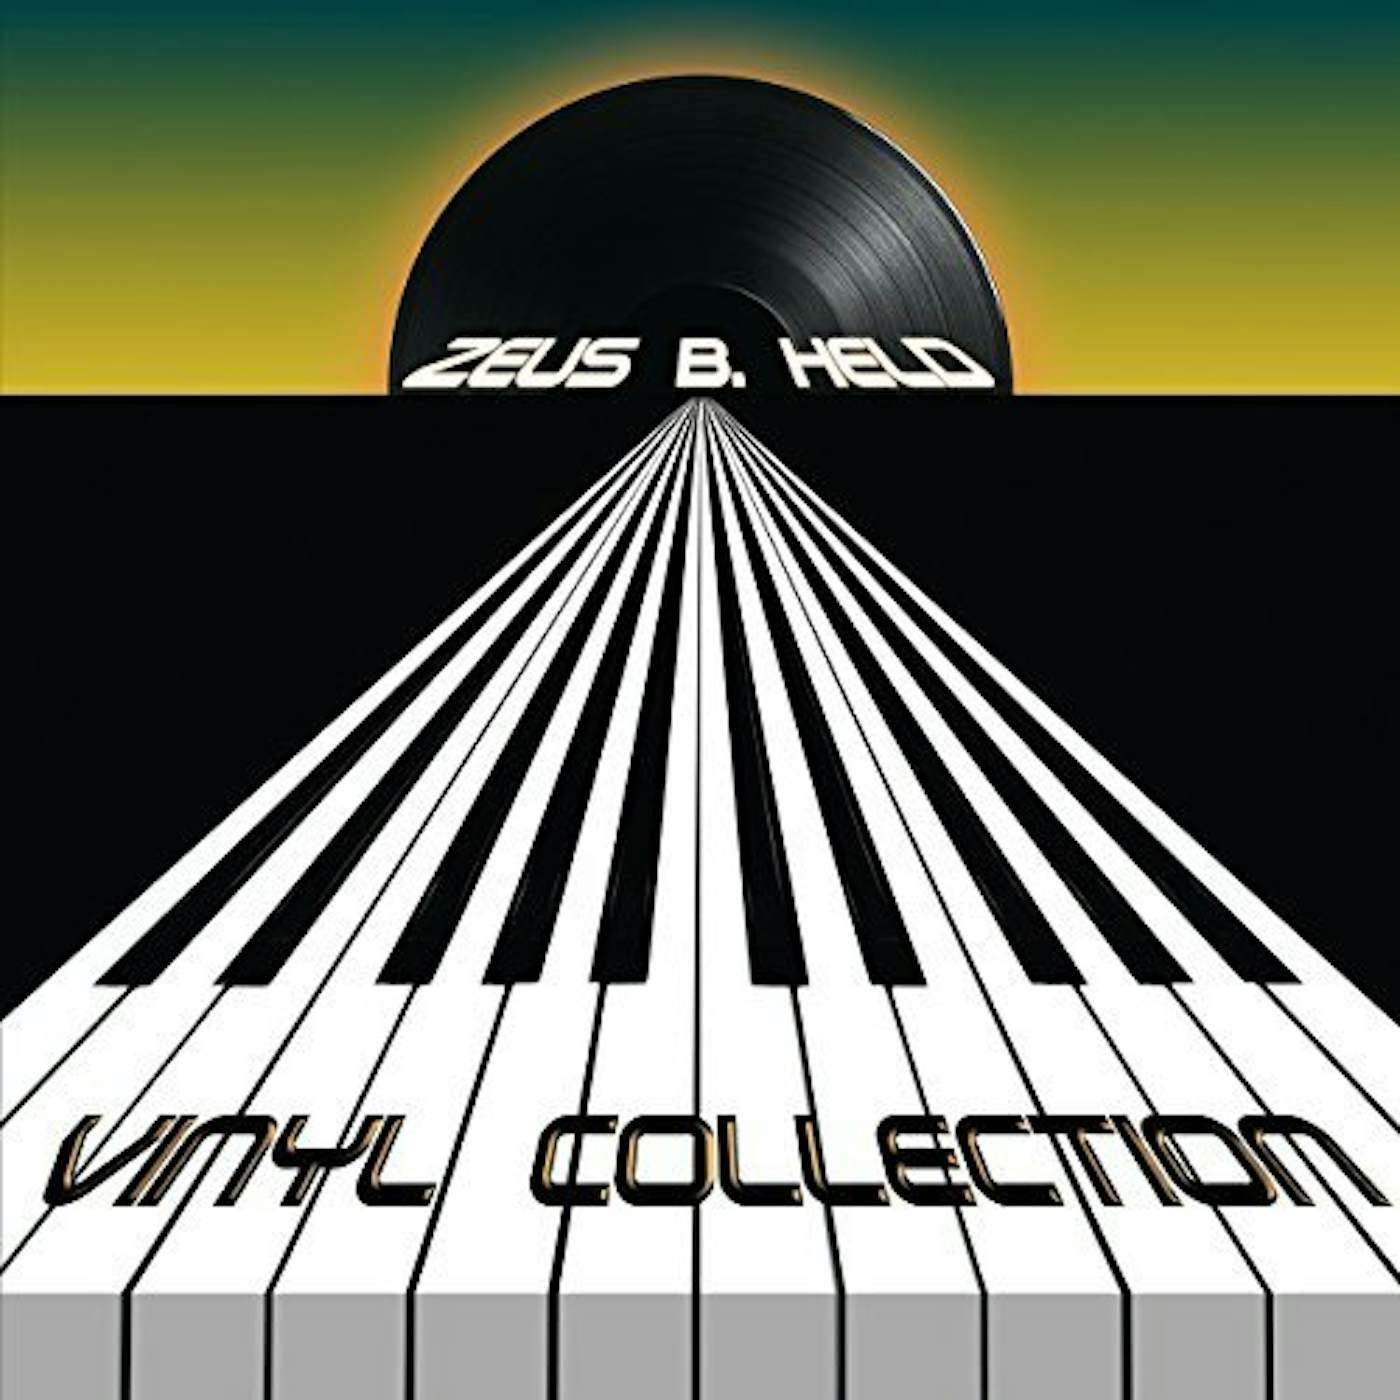 Zeus B. Held VINYL COLLECTION Vinyl Record